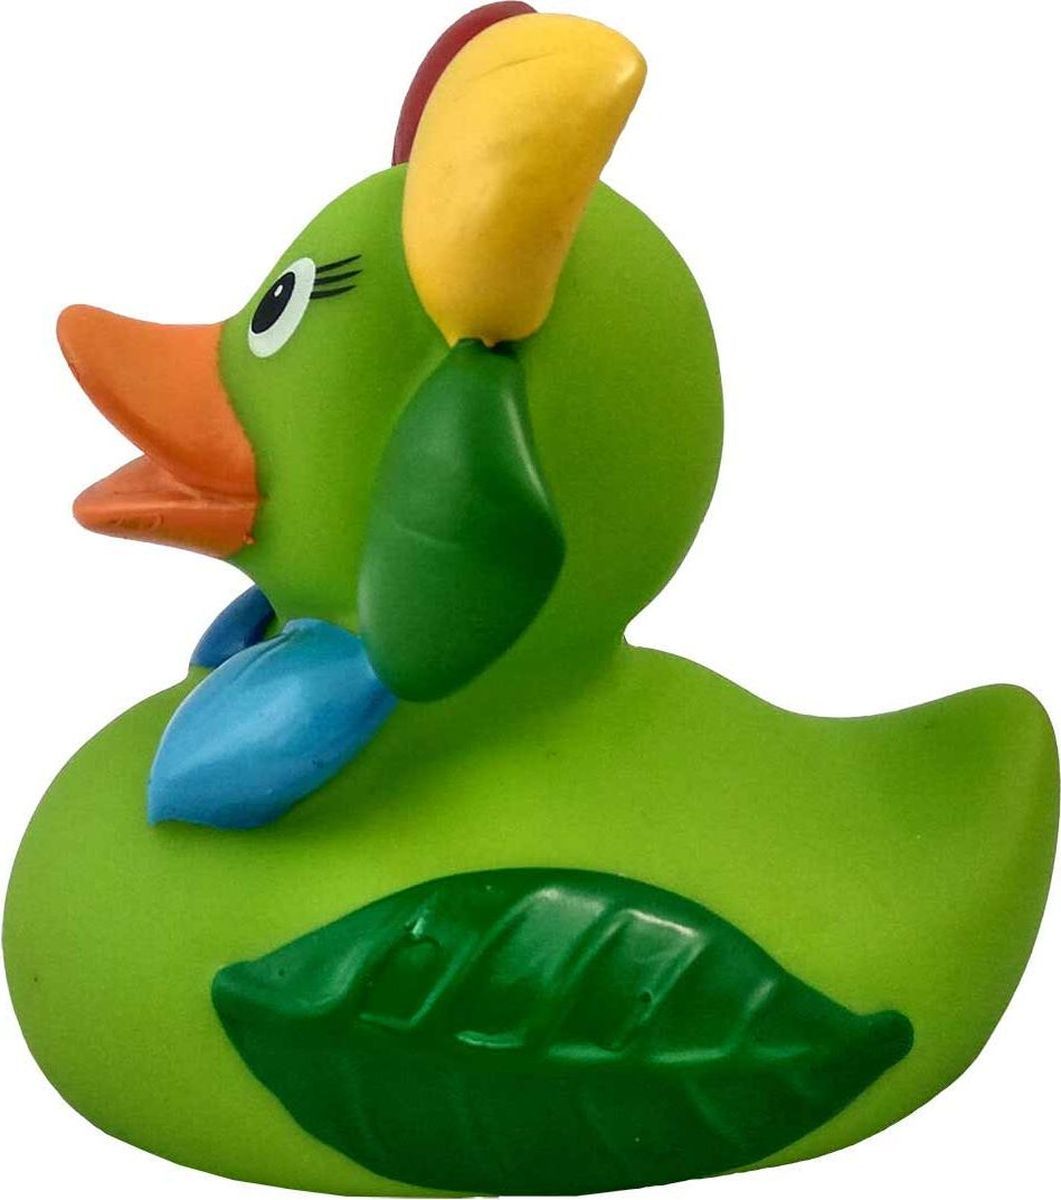 Funny Ducks     -